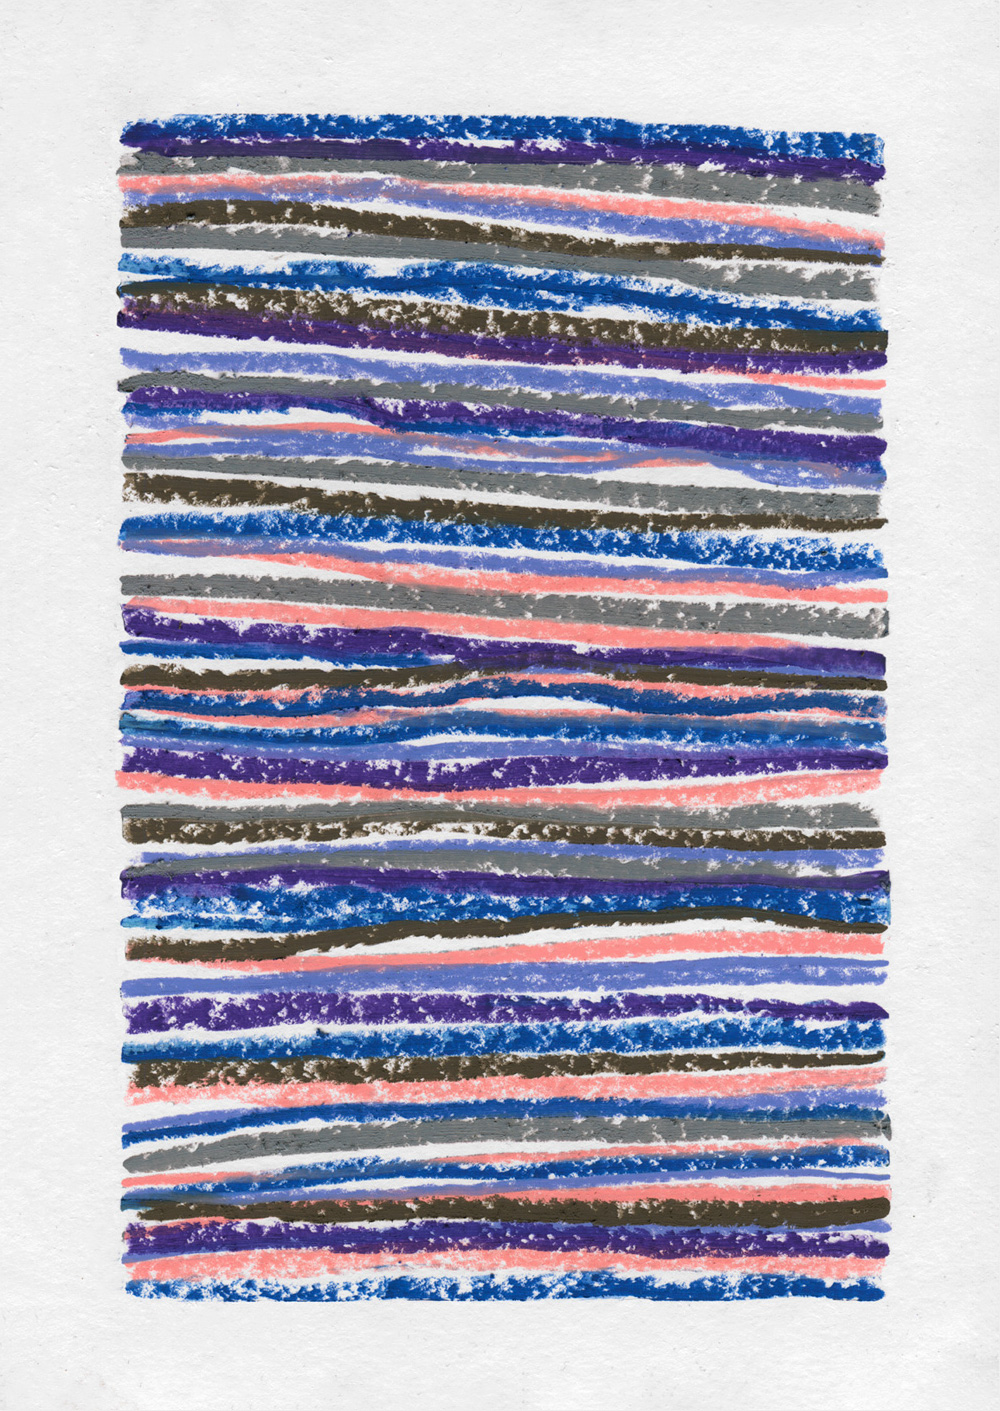 james-watkins-abstract-art-on-paper-london